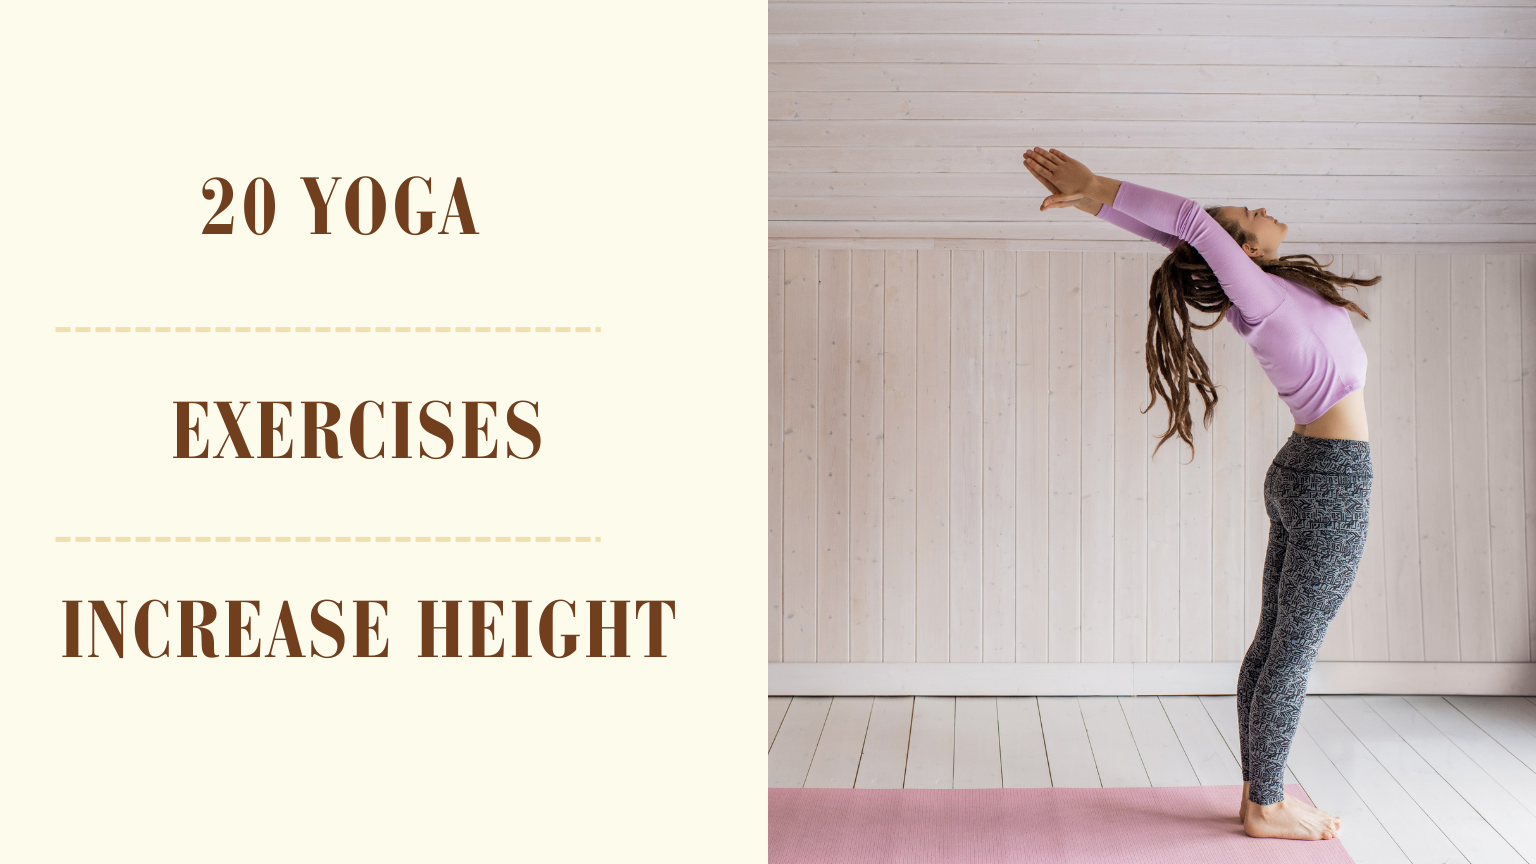 Stretch N Fold Fitness, Flexibility, Balance & Posture